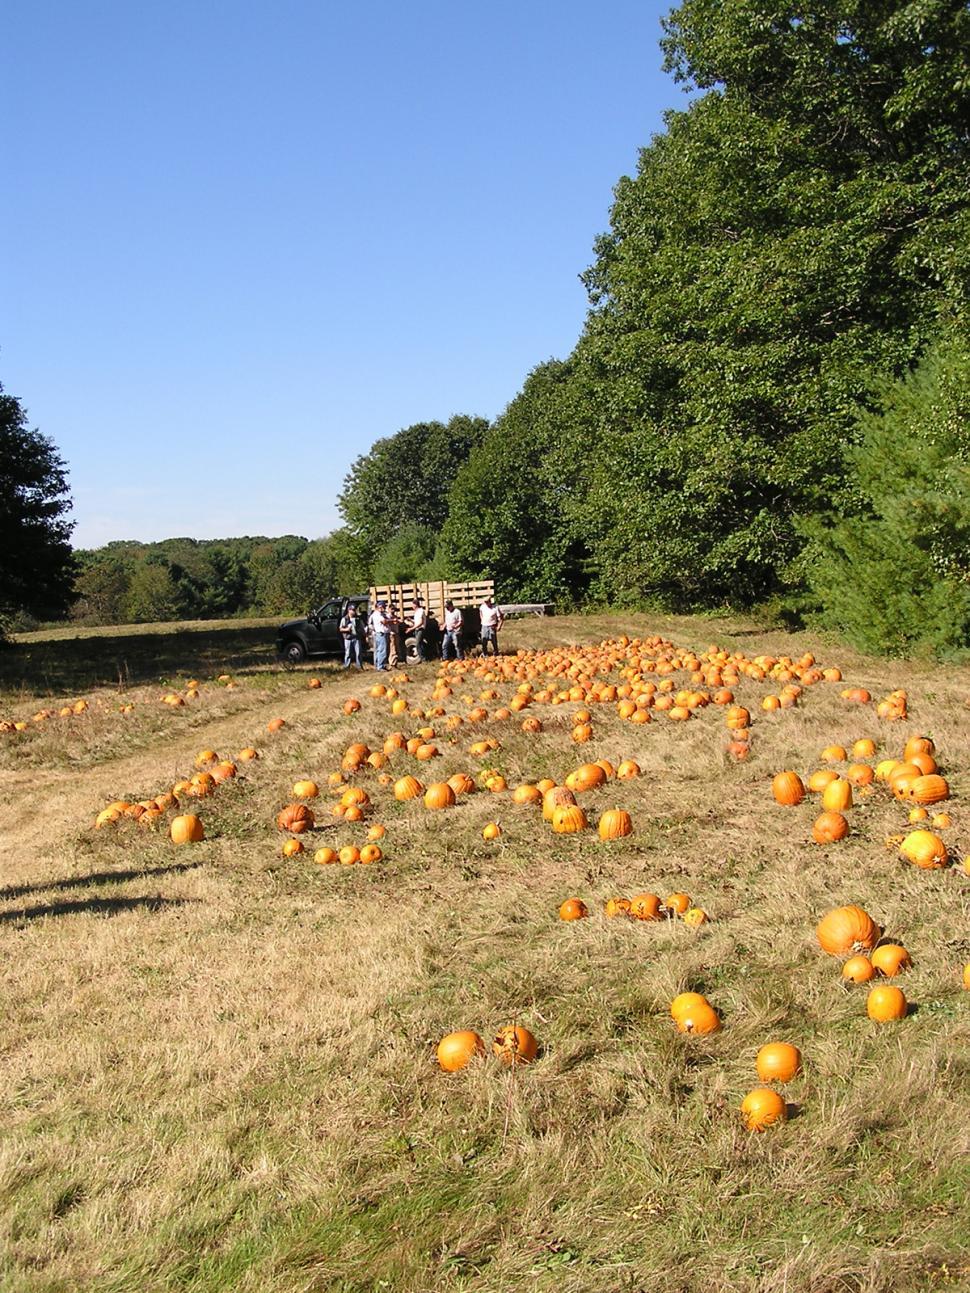 Free Image of Field of Pumpkins 